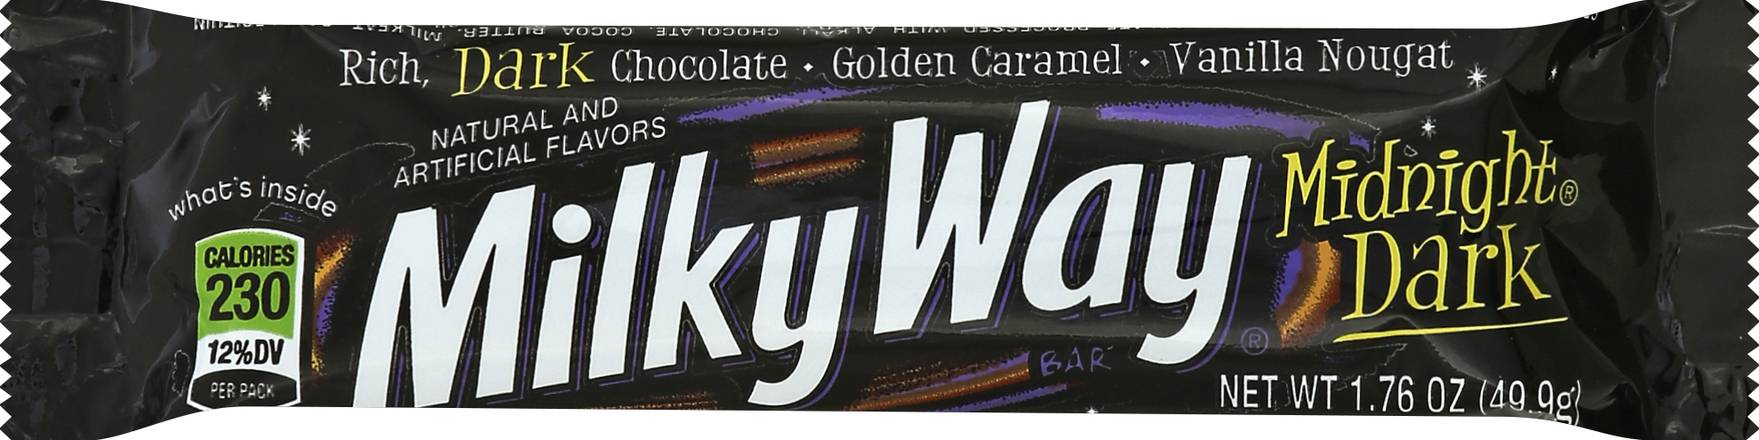 Milky Way Midnight Candy Bar (dark chocolate )